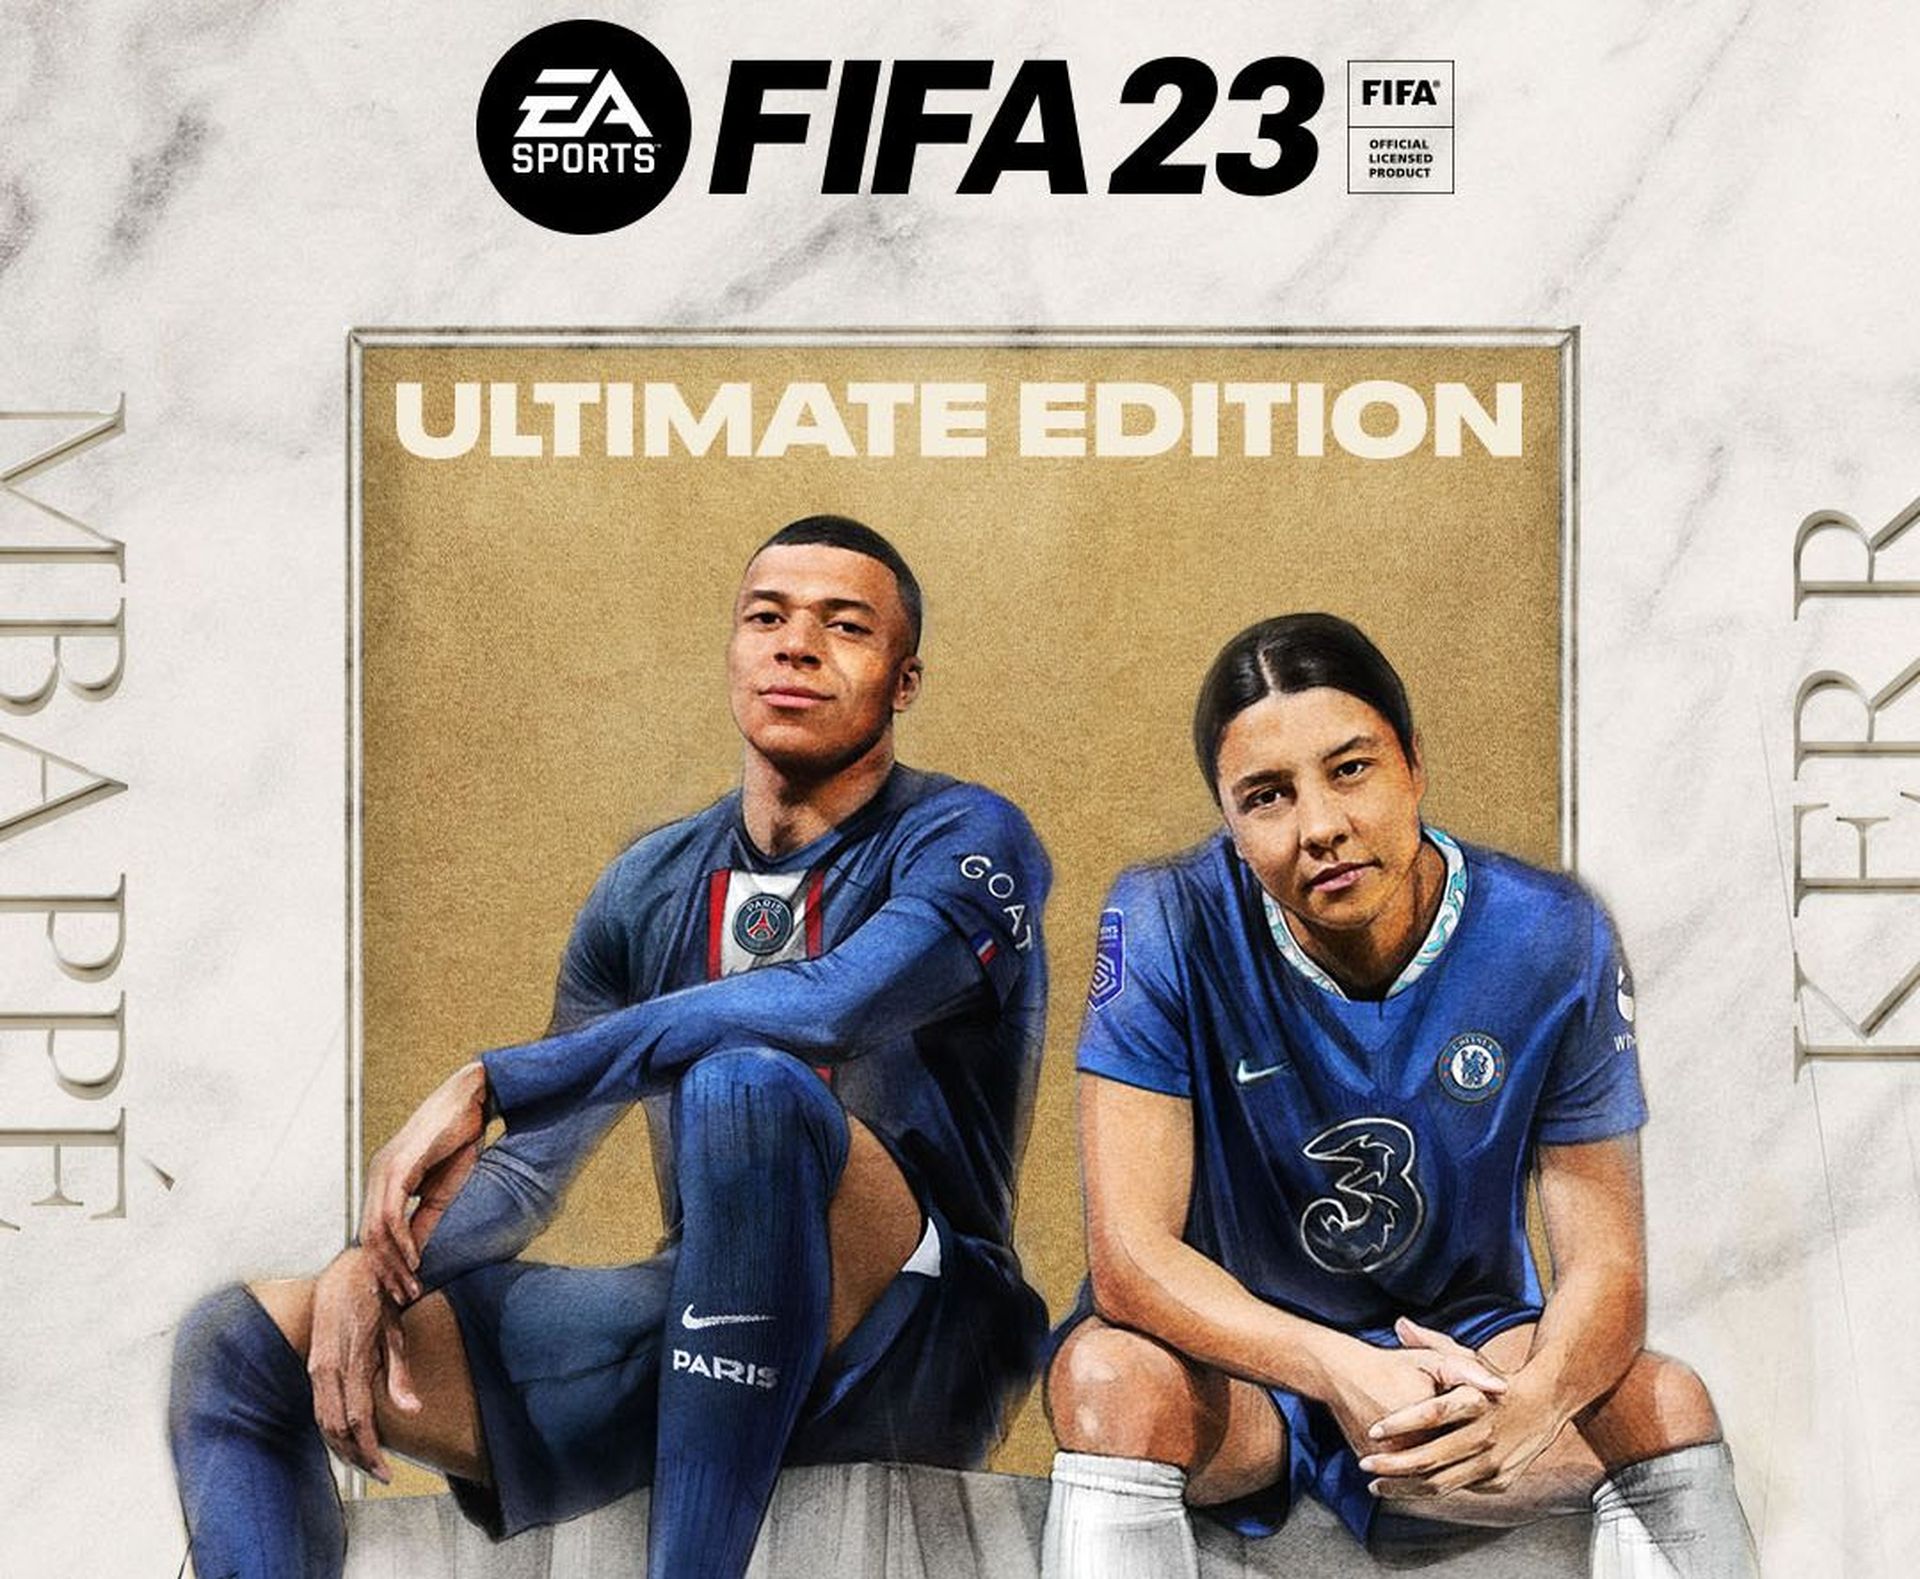 FIFA 23 trailer release date announced